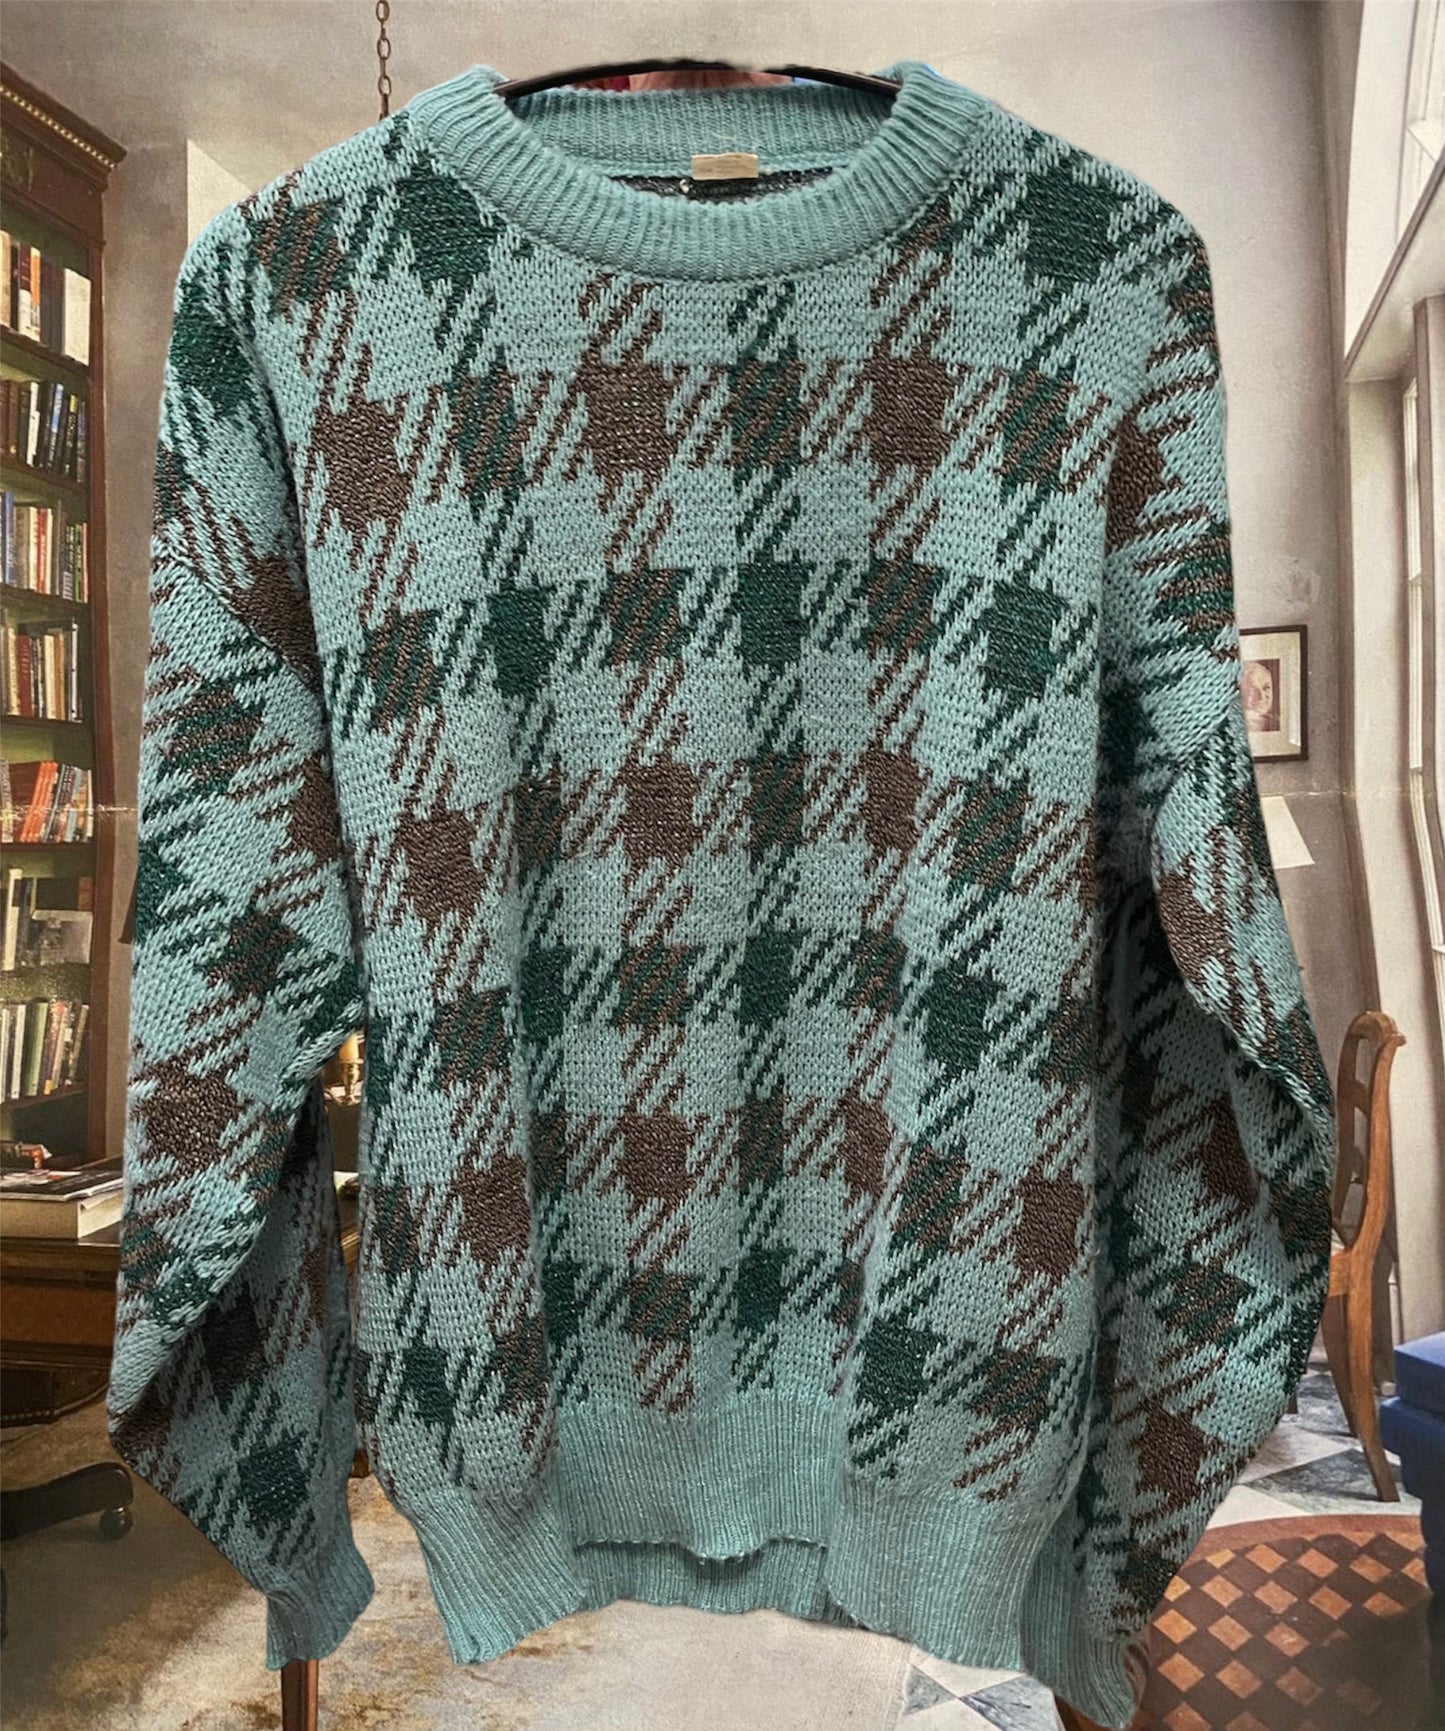 90s patterned jumper .Fits best M/L